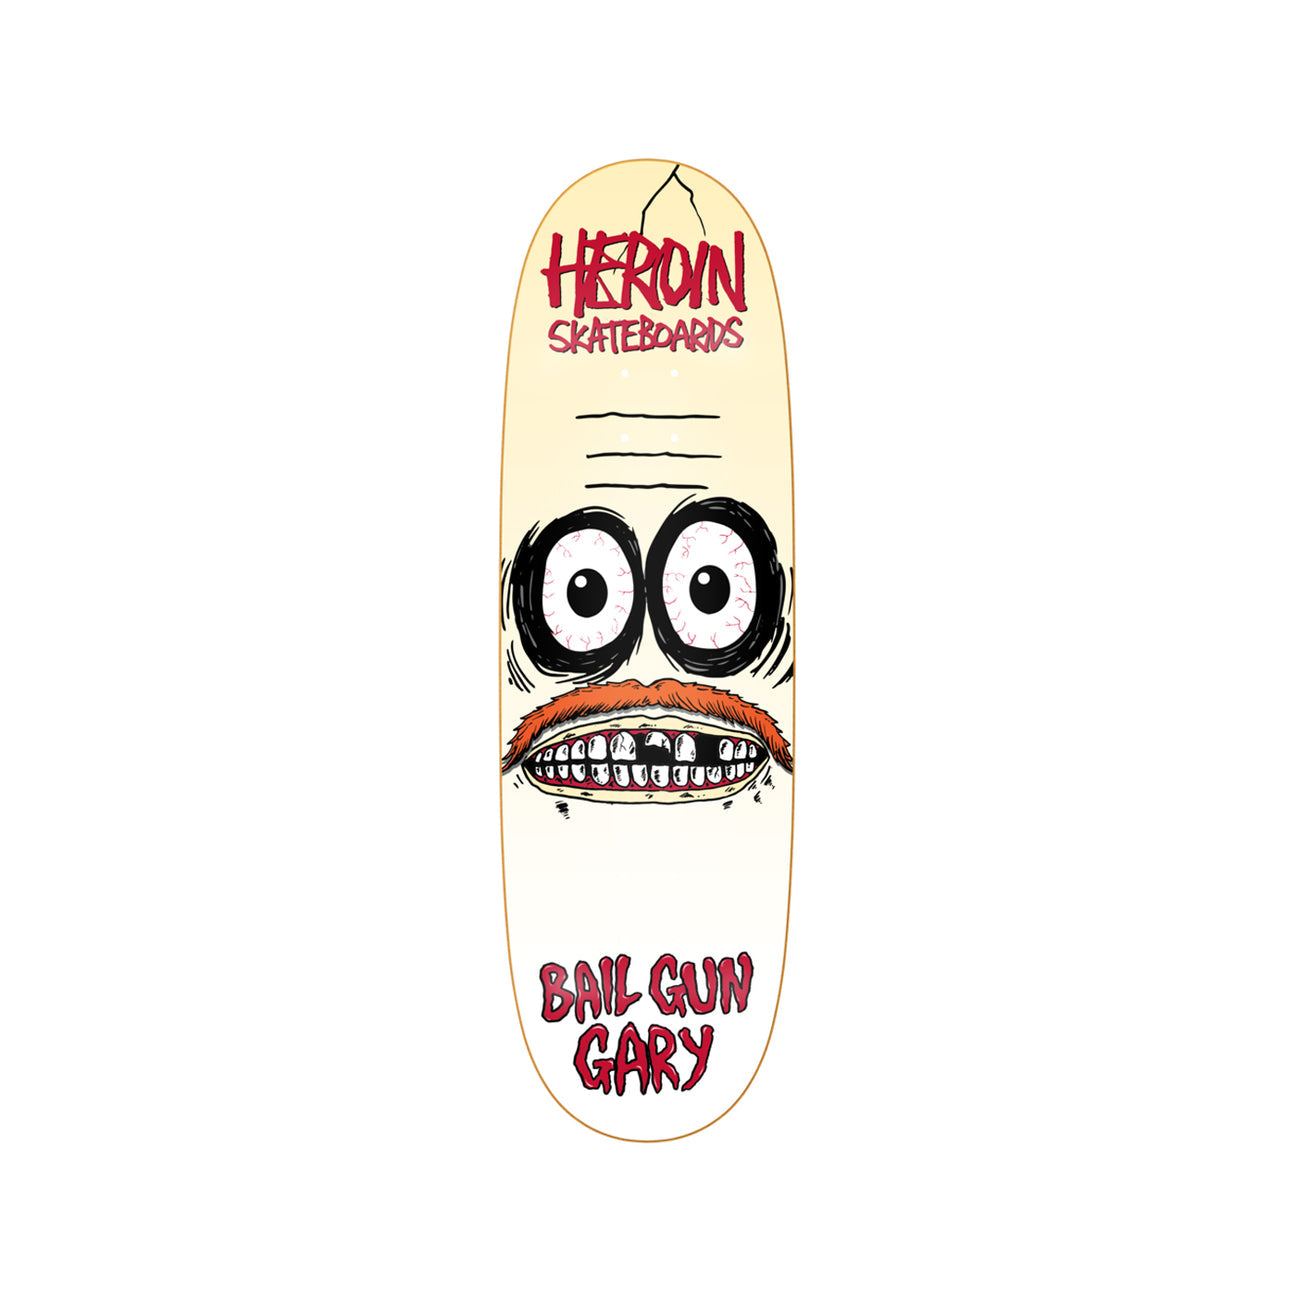 Heroin Skateboards Bail Gun Gary 3 SYM Skateboard Deck 9.75" - Apple Valley Emporium